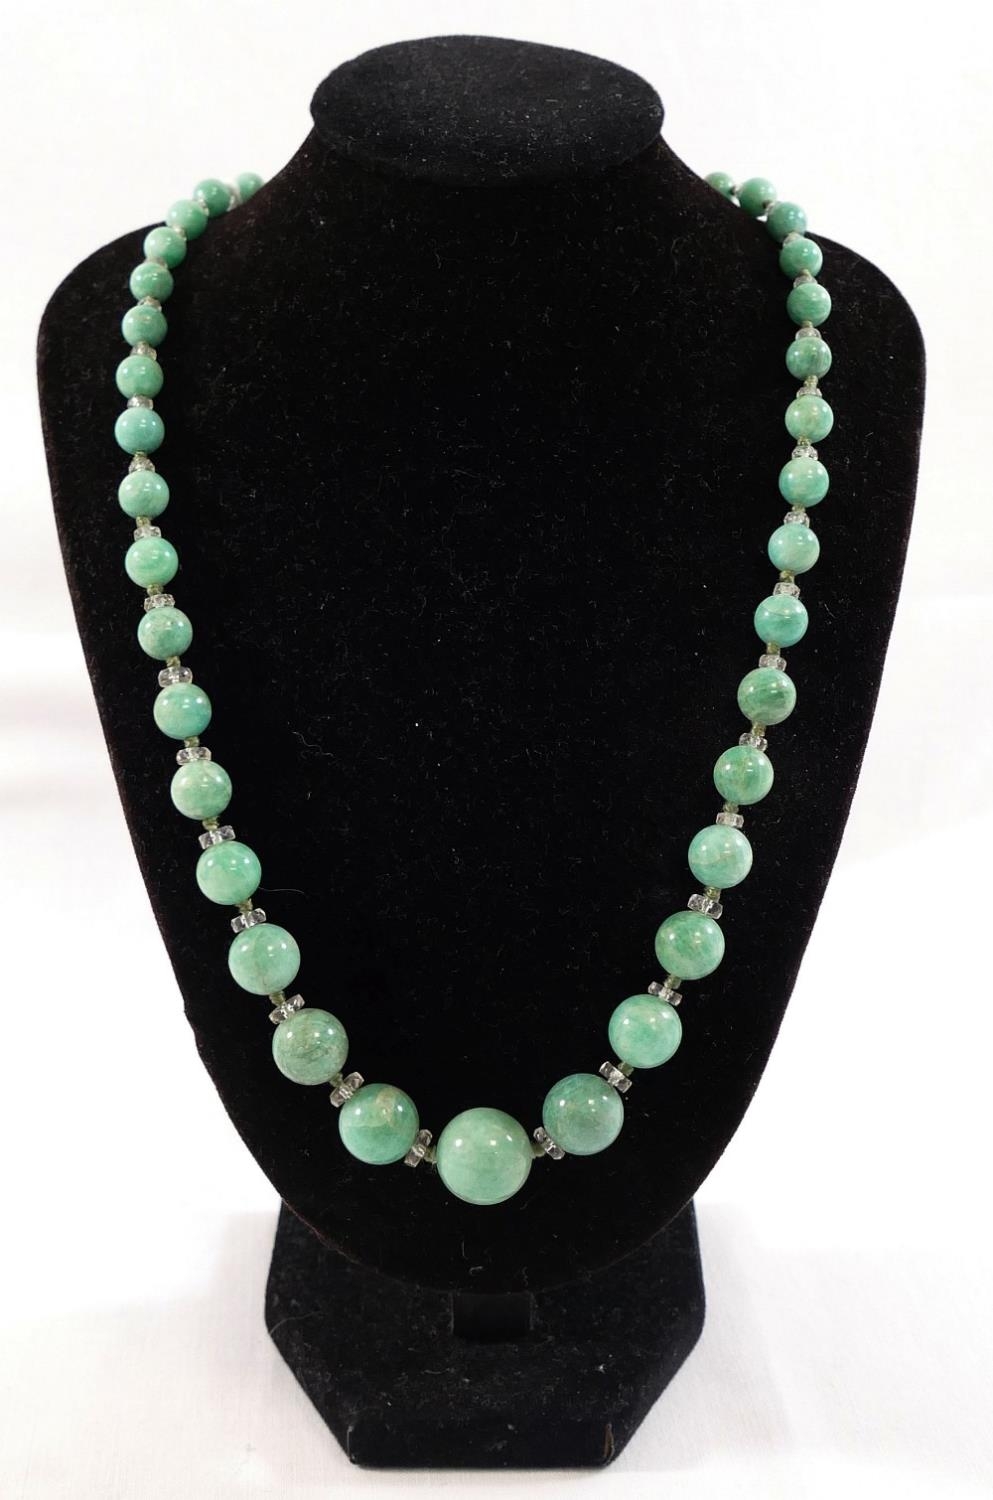 Antique Graduated Amazonite Beads Gemstone Necklace c.1920's Art Deco - Image 5 of 6